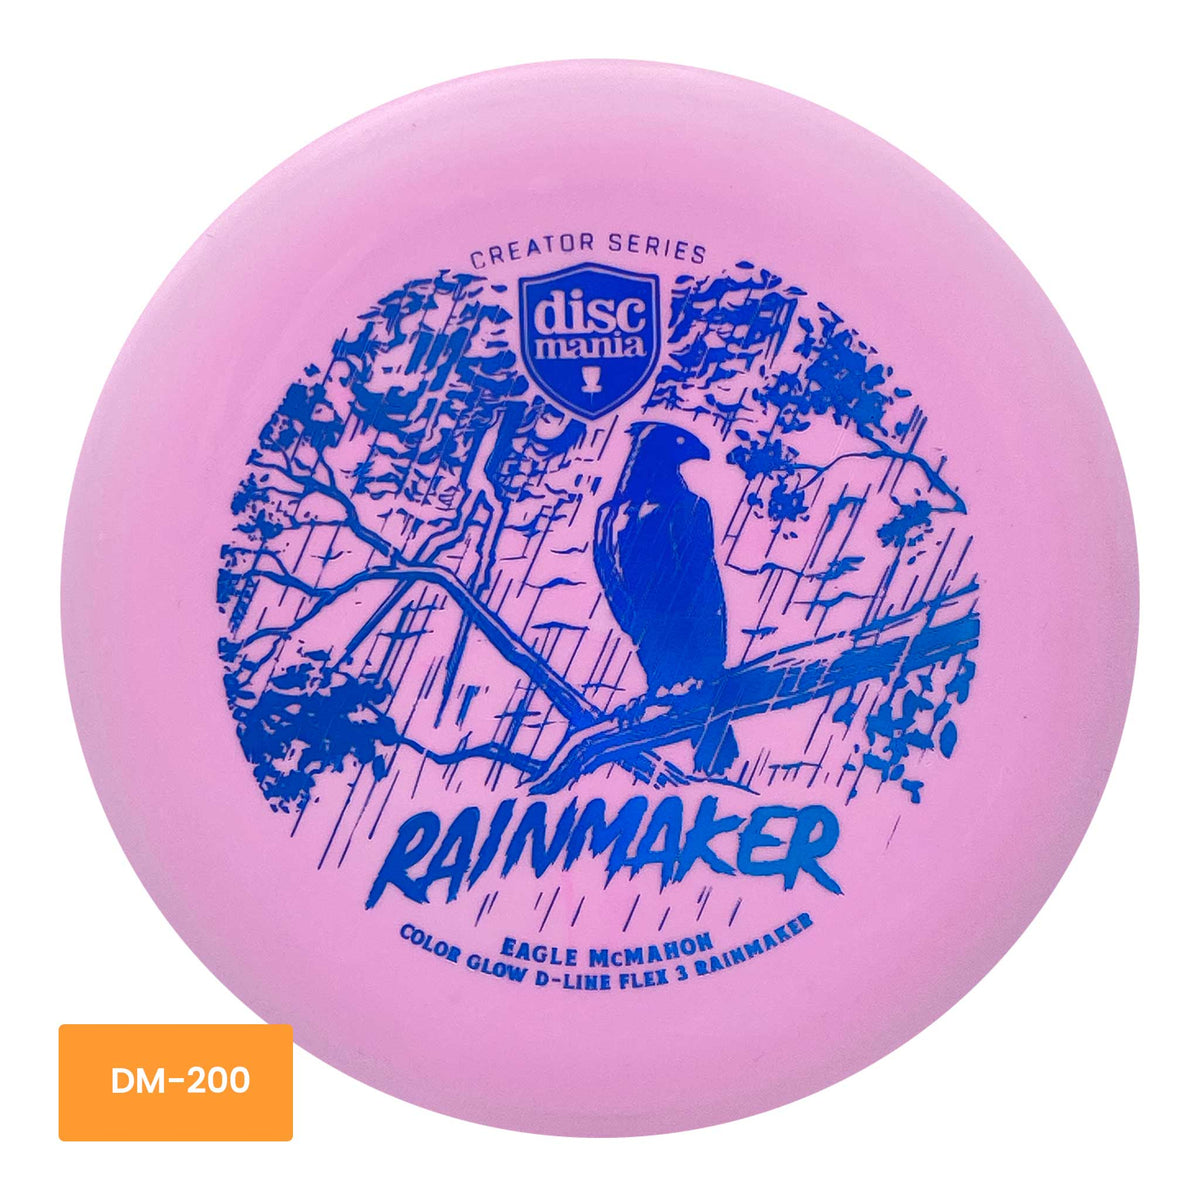 Discmania Creator Series Color Glow D-Line Eagle McMahon Rainmaker Flex 3 putter - Pink/Blue